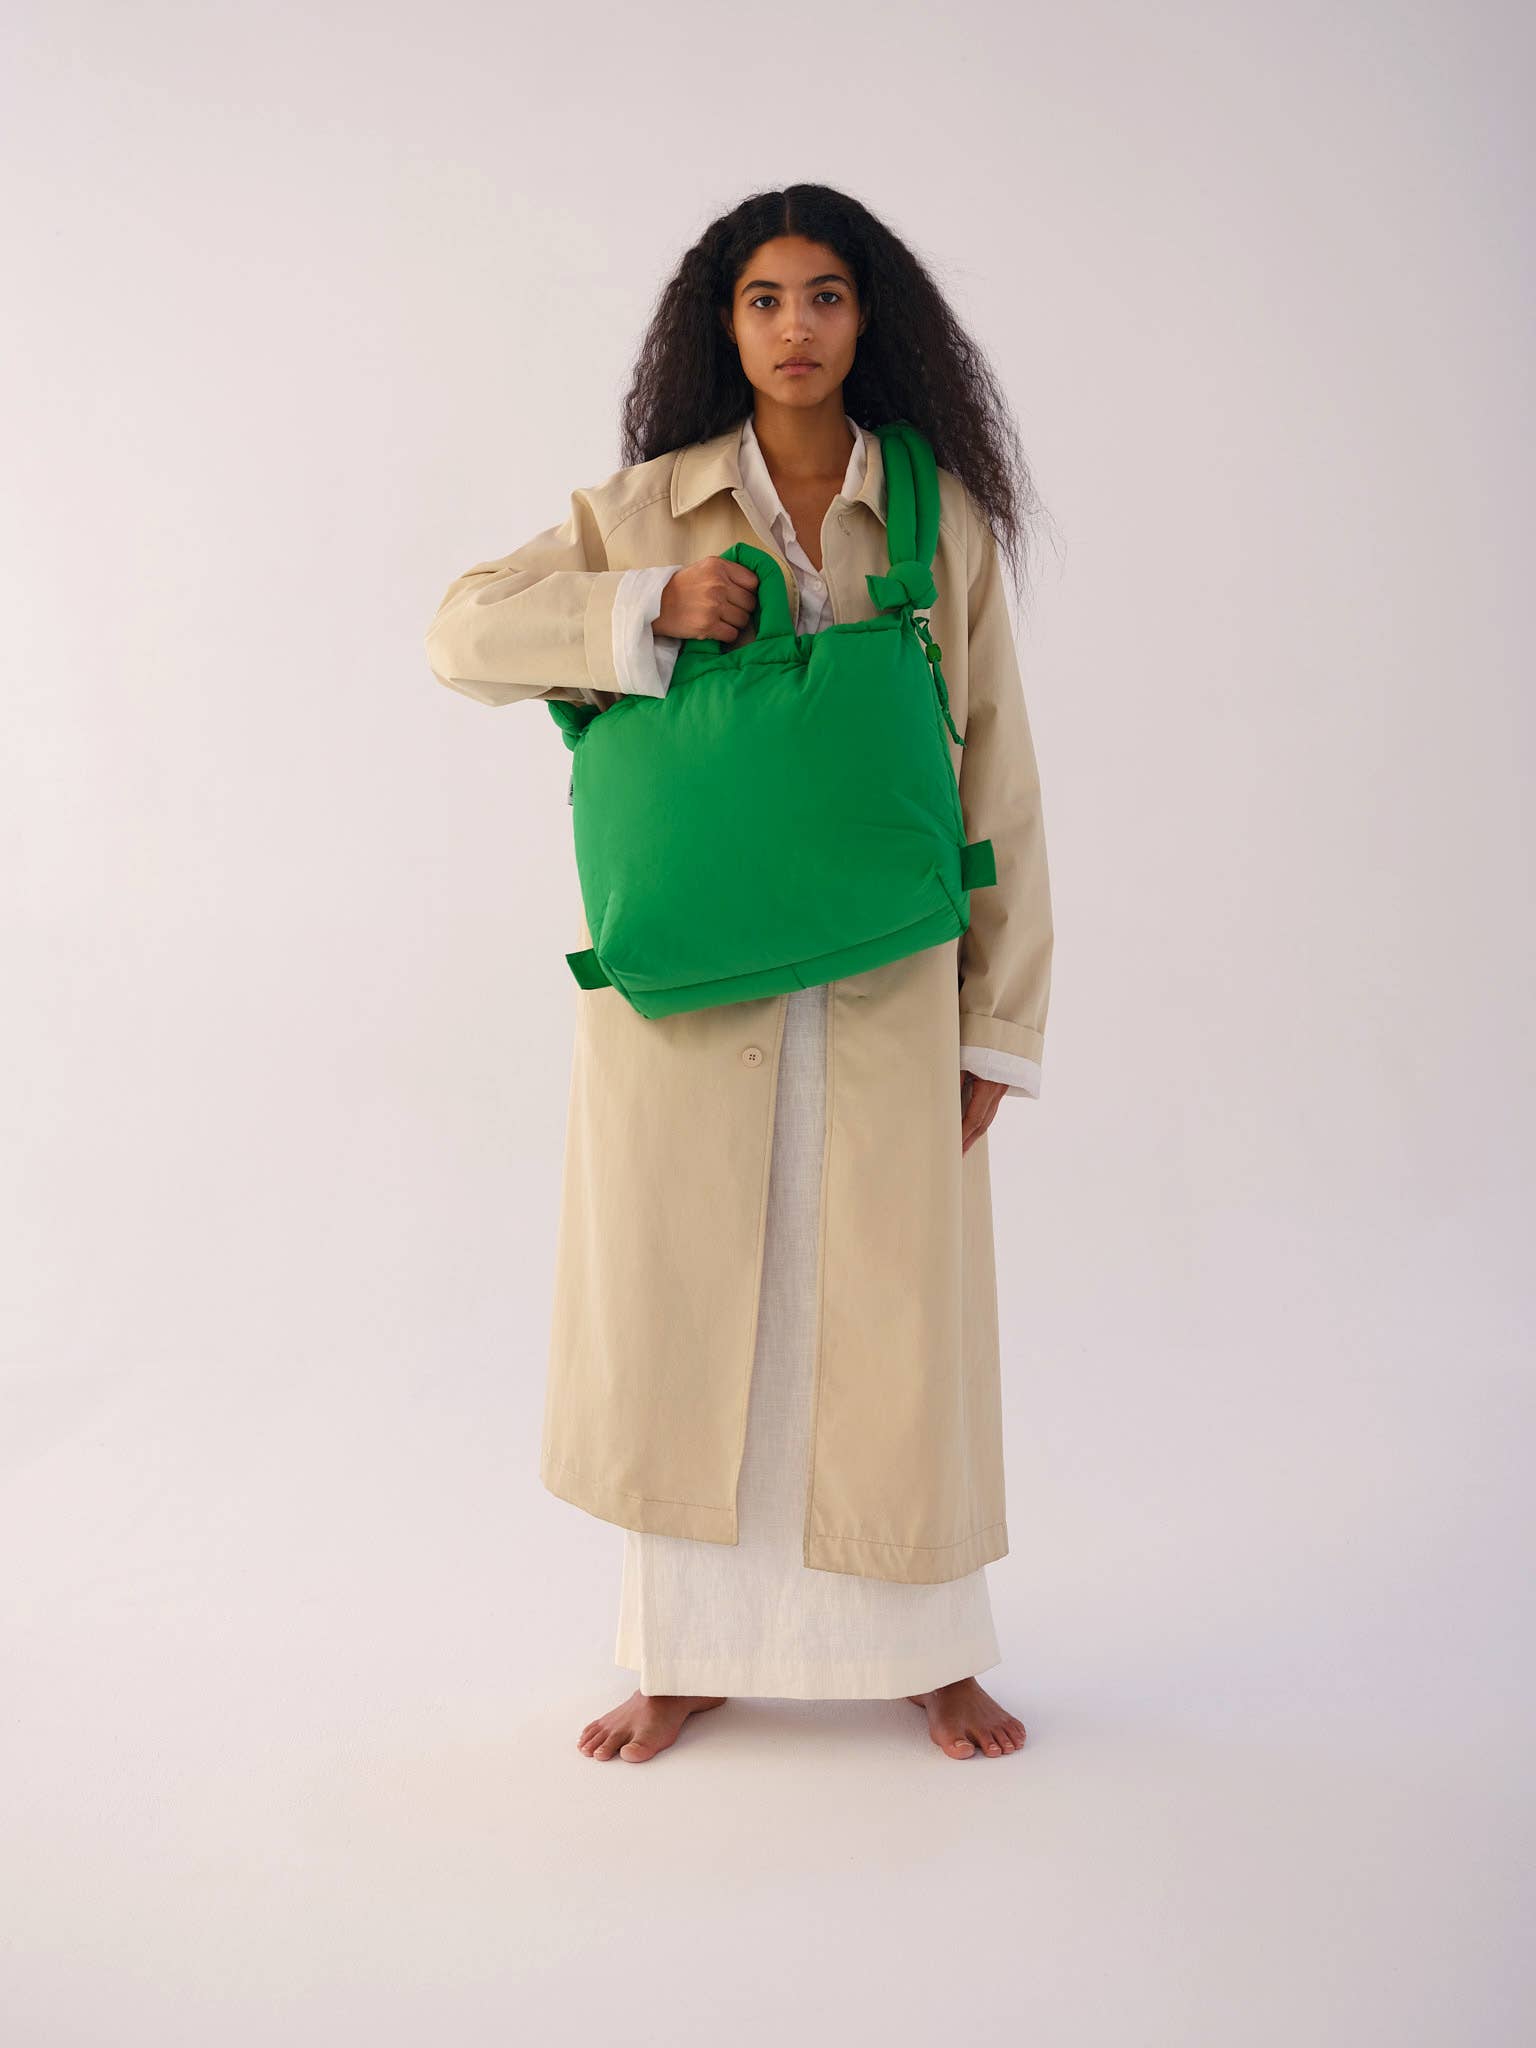 Ona Soft Bag: Green